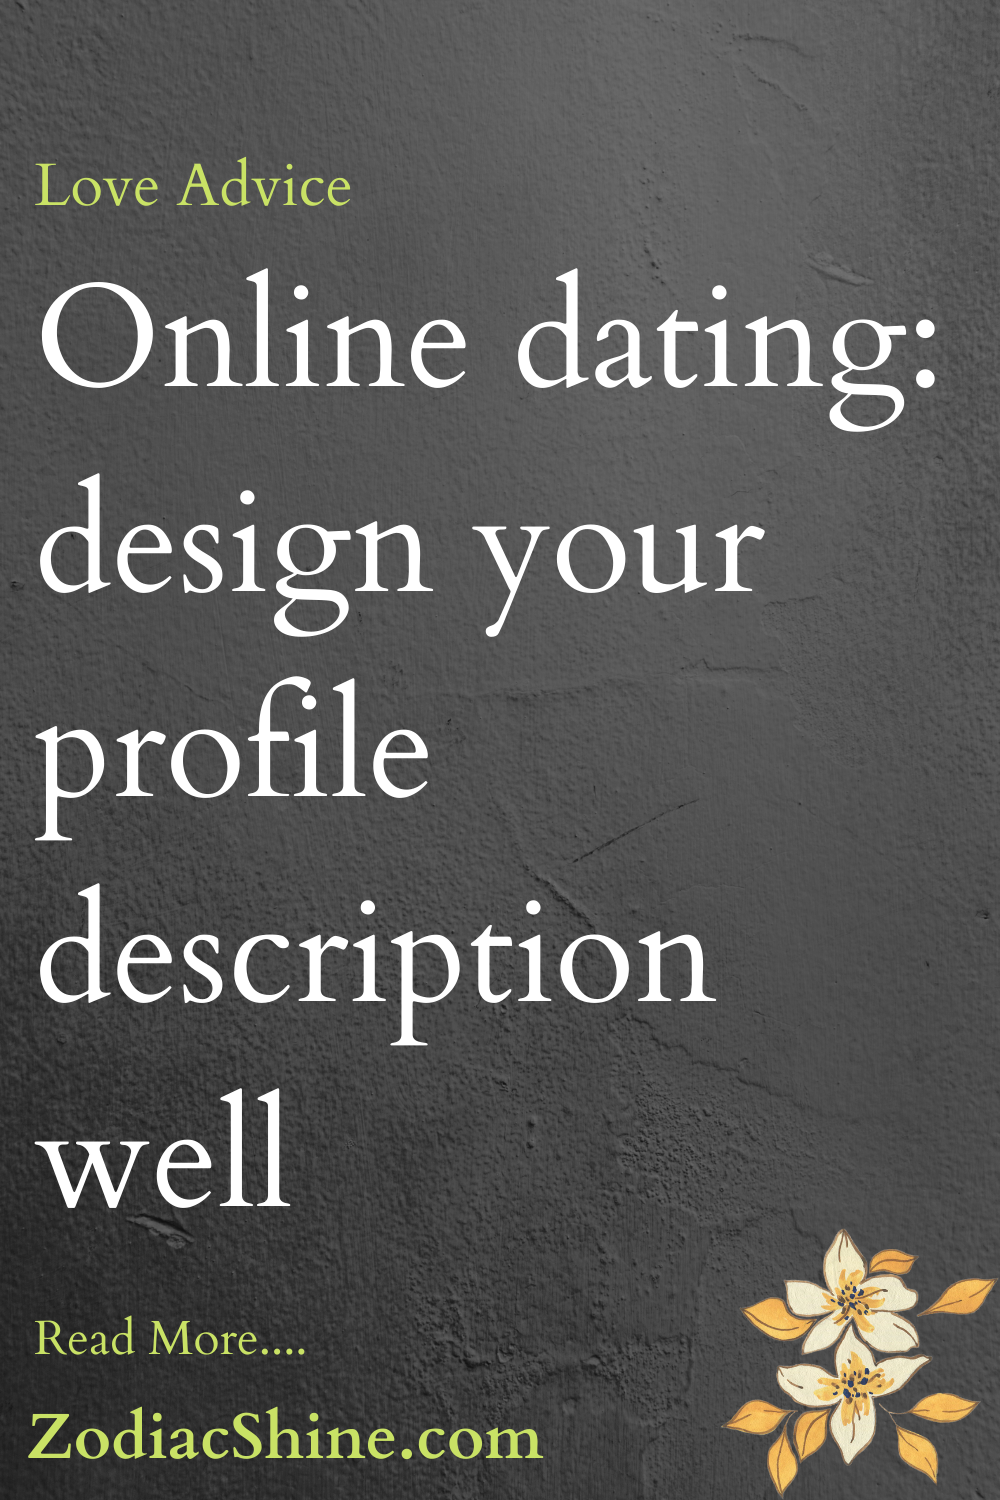 Online dating: design your profile description well